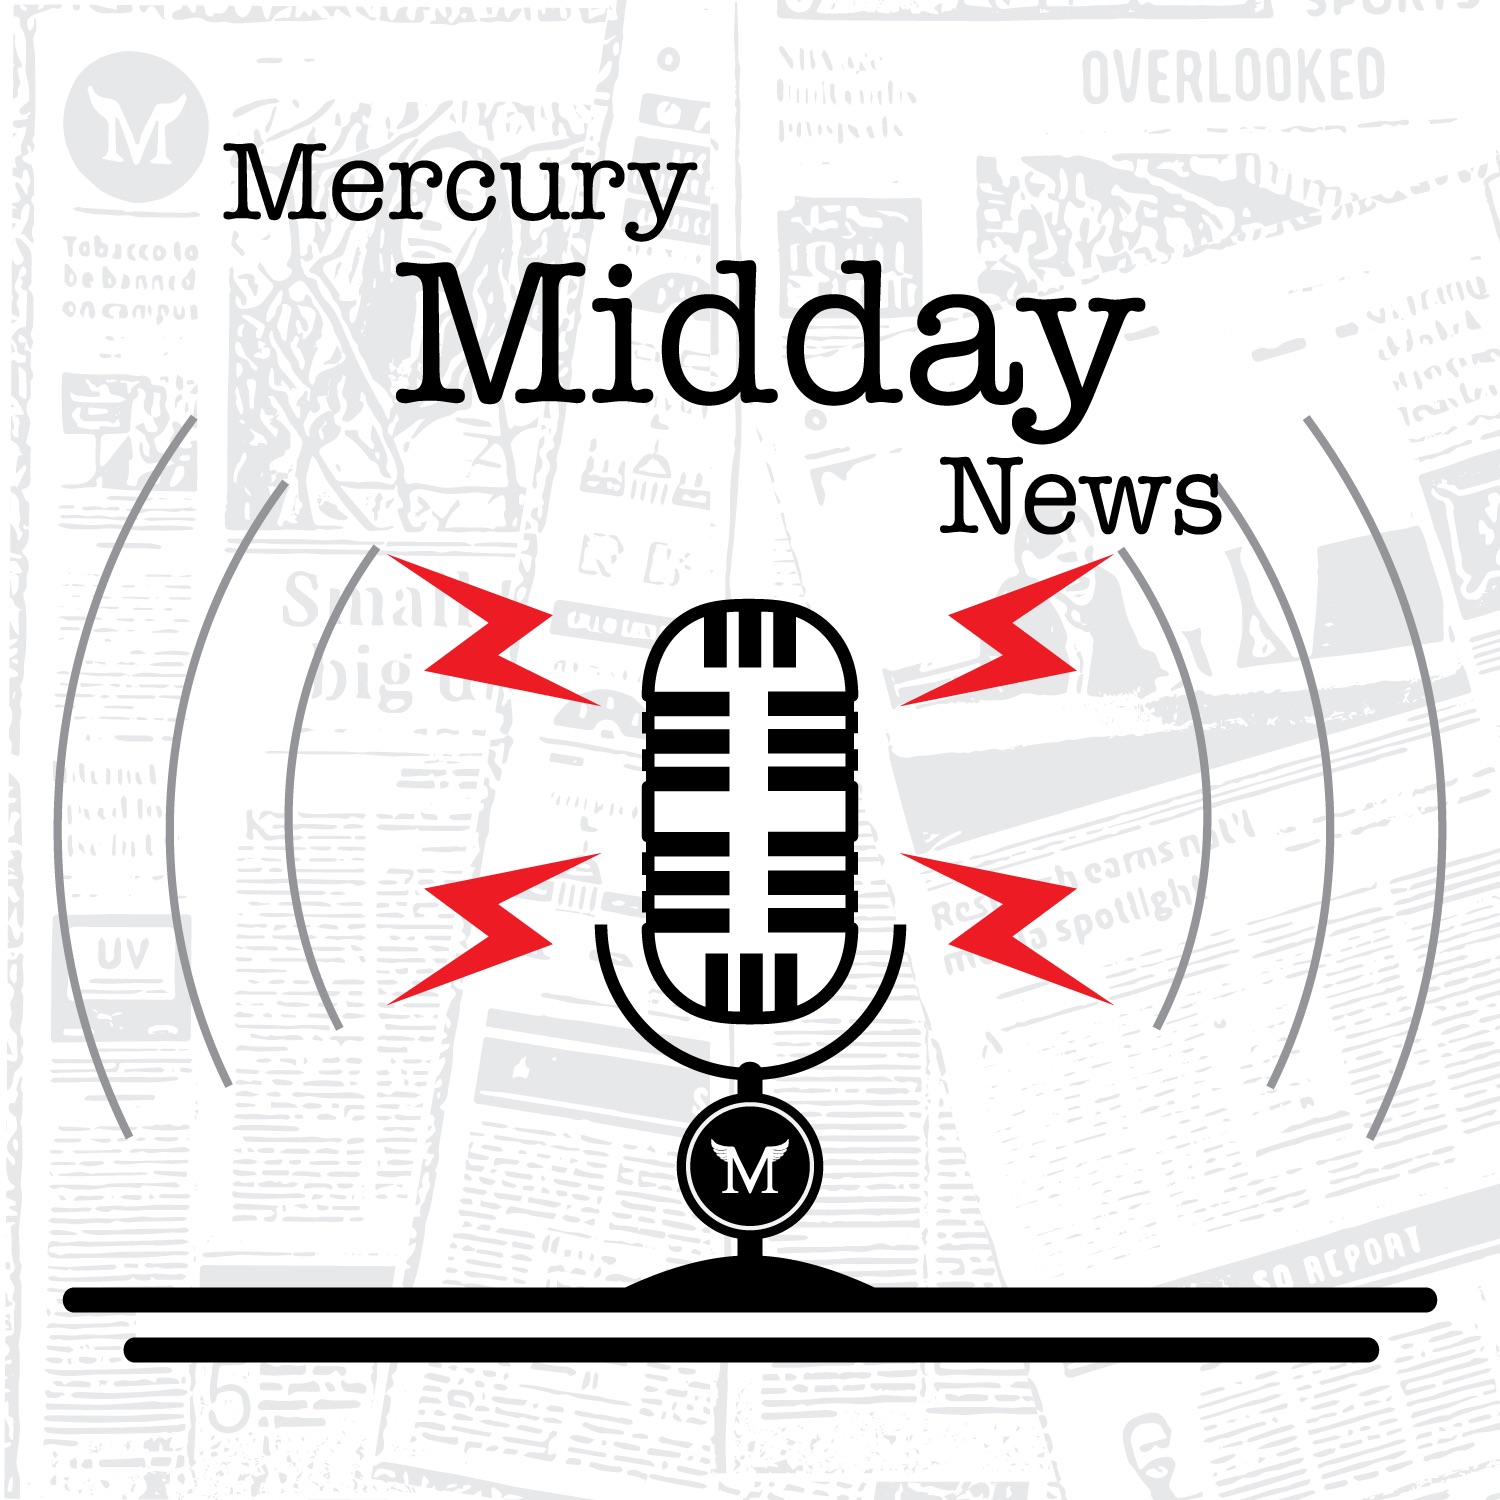 Mercury Midday News 01/19/17